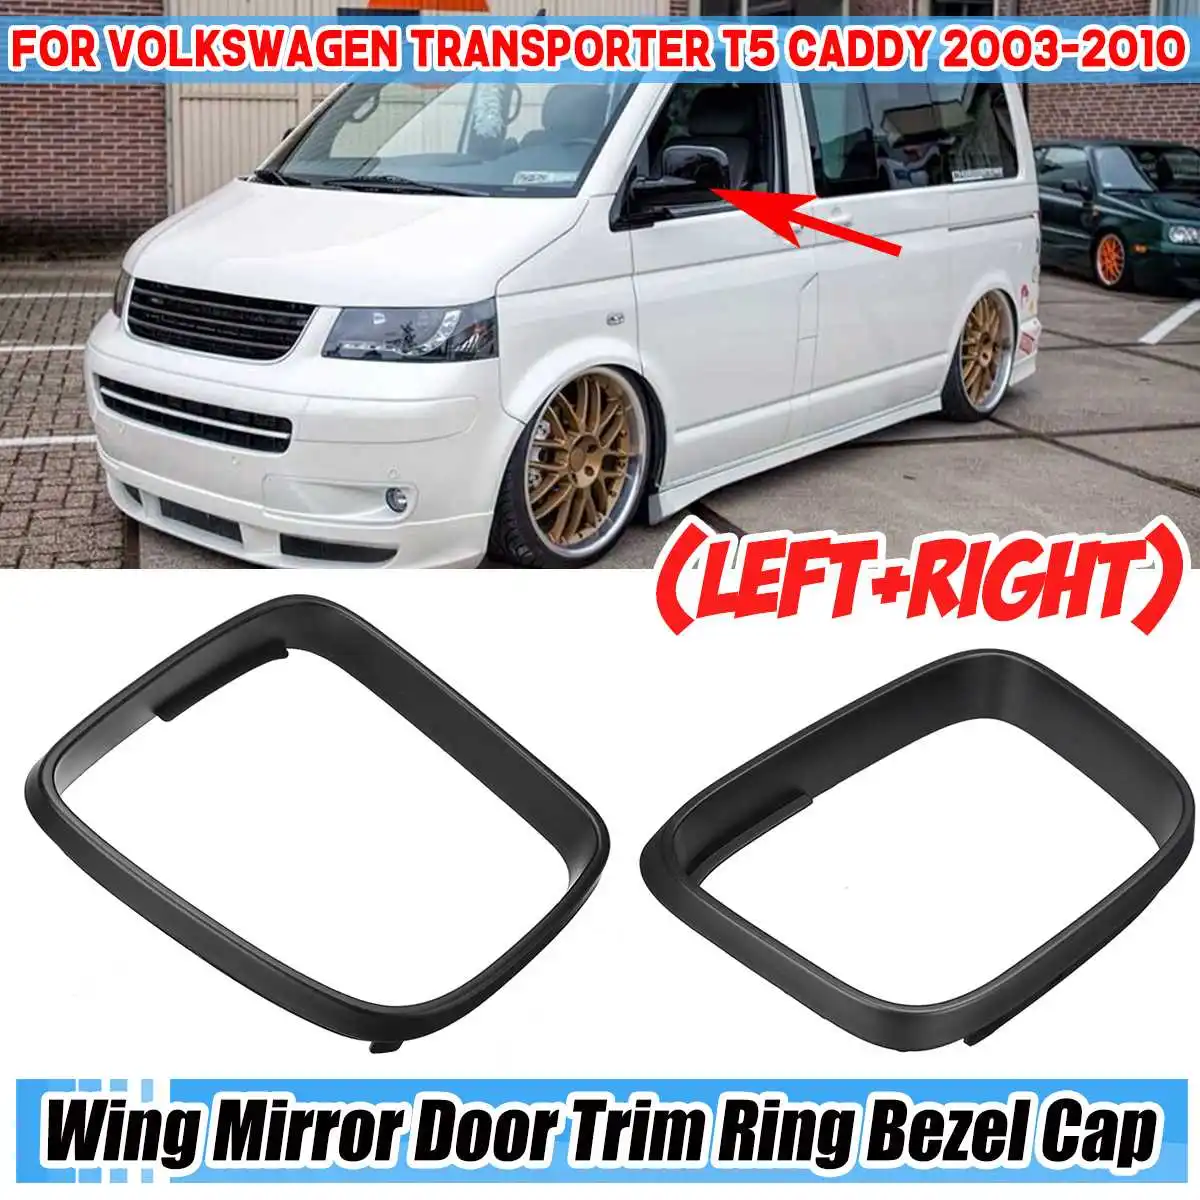 

Black Car Side Wing Rear View Mirror Door Trim Ring Bezel Cap Cover Trim For VW ForVolkswagen For Transporter T5 Caddy 2003-2010